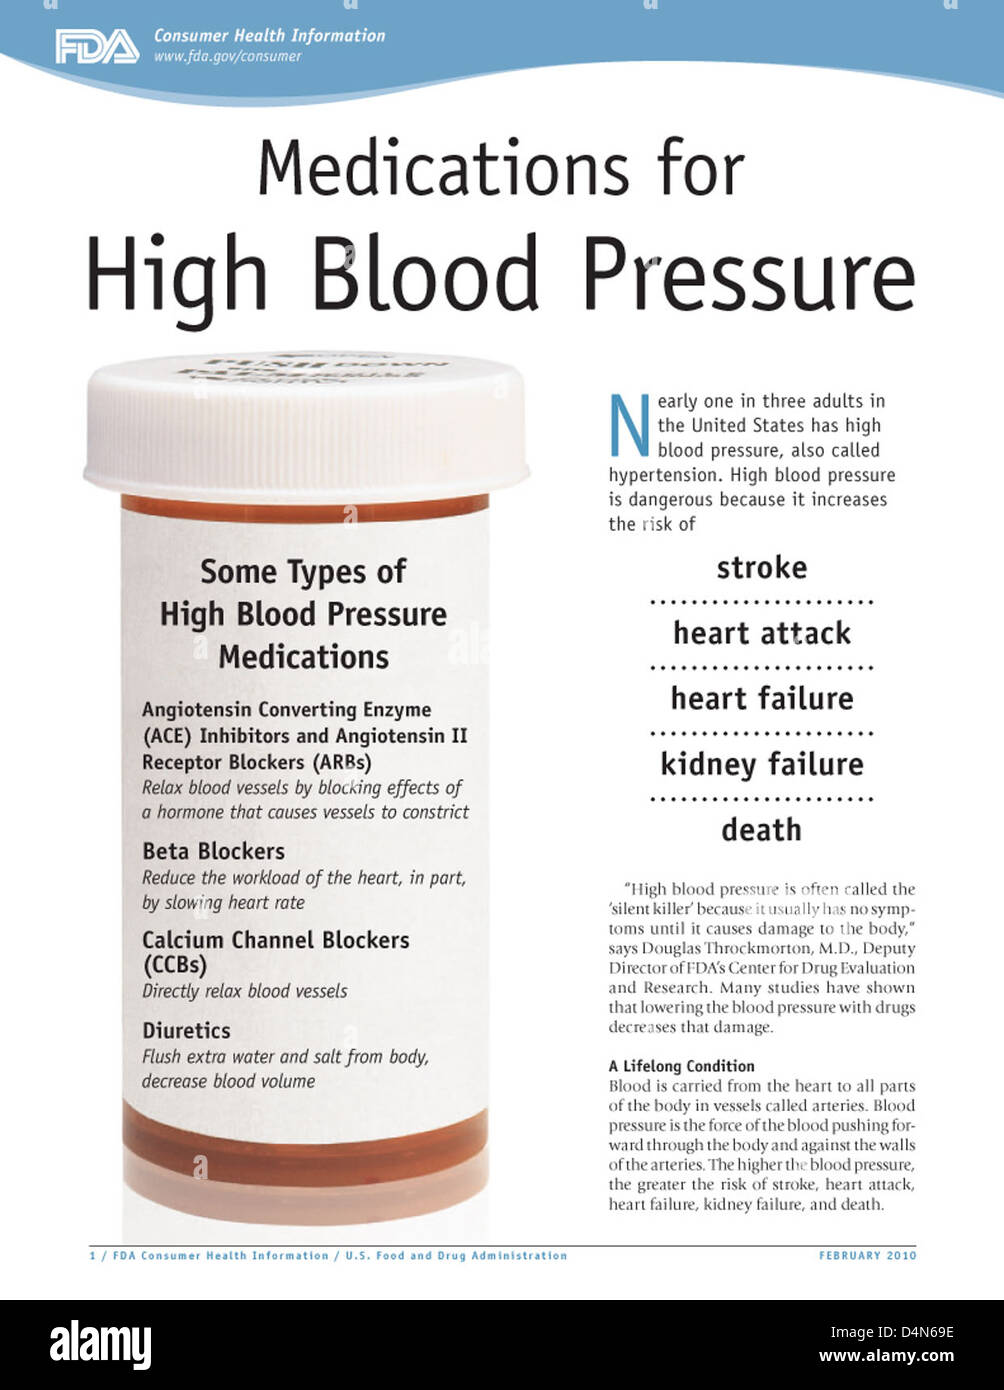 medications-for-high-blood-pressure-D4N69E.jpg